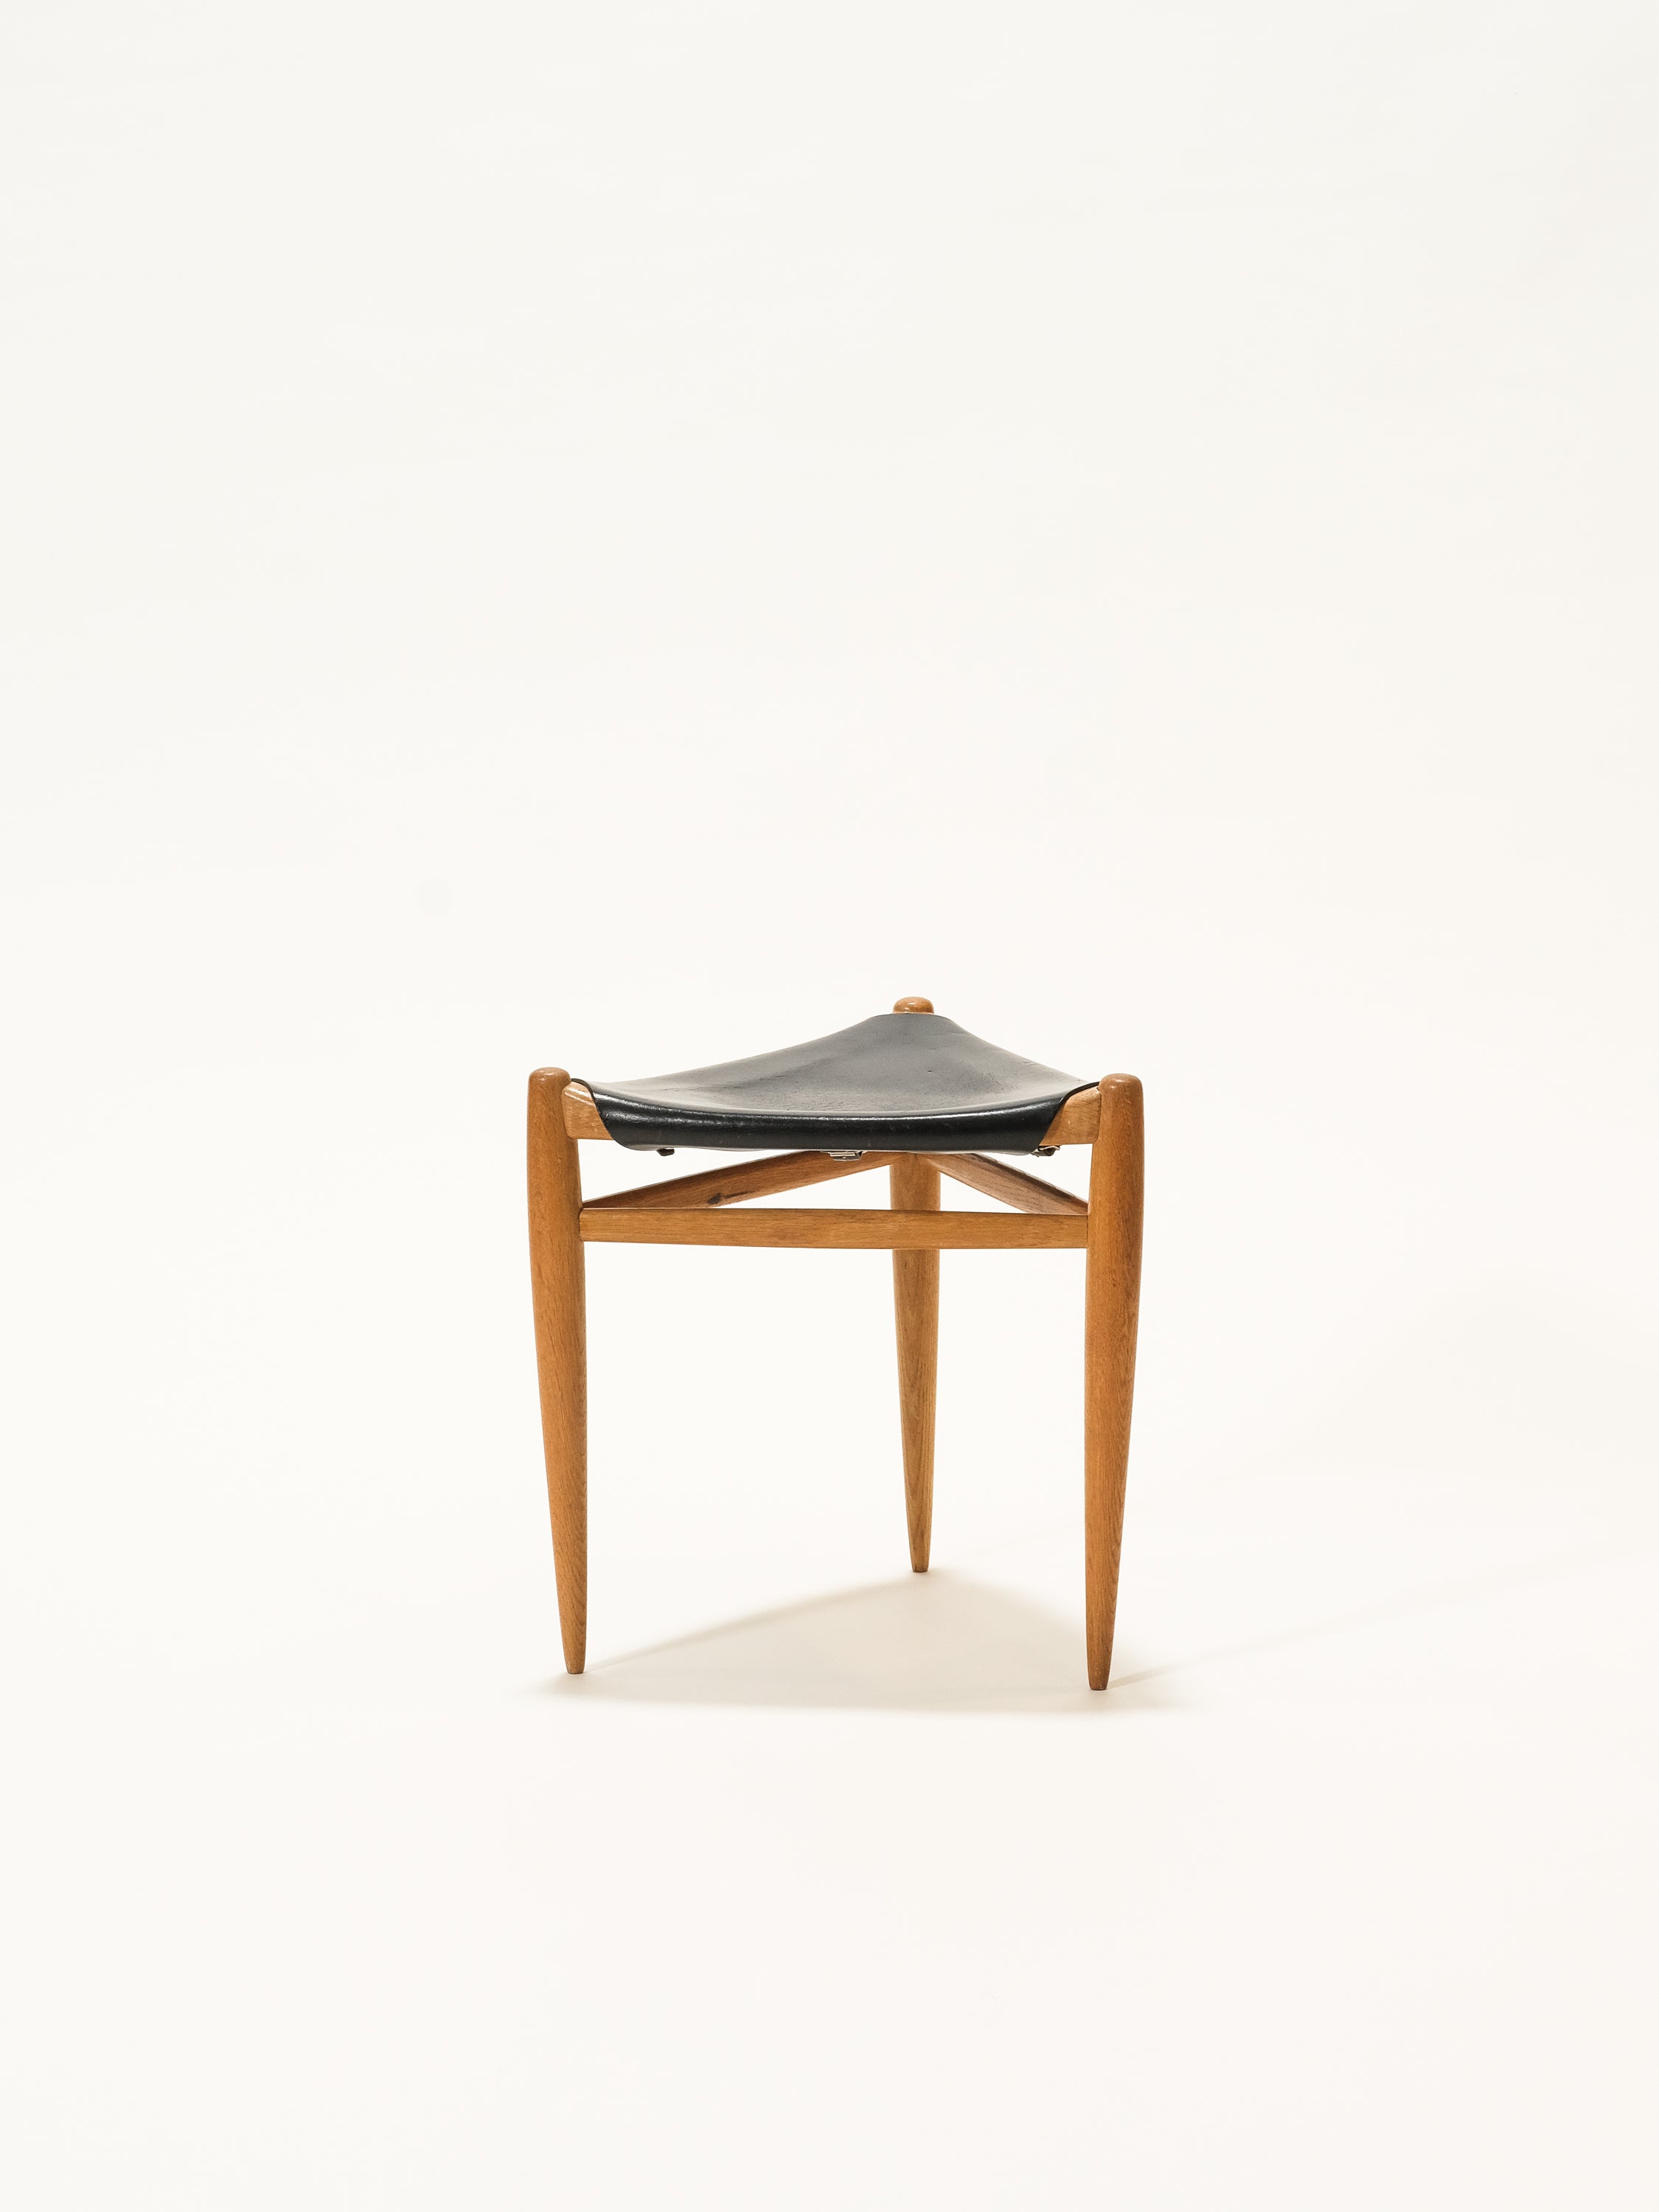 Tripod Stool in Oak and Leather by Uno & Östen Kristiansson, Luxus, 1960s